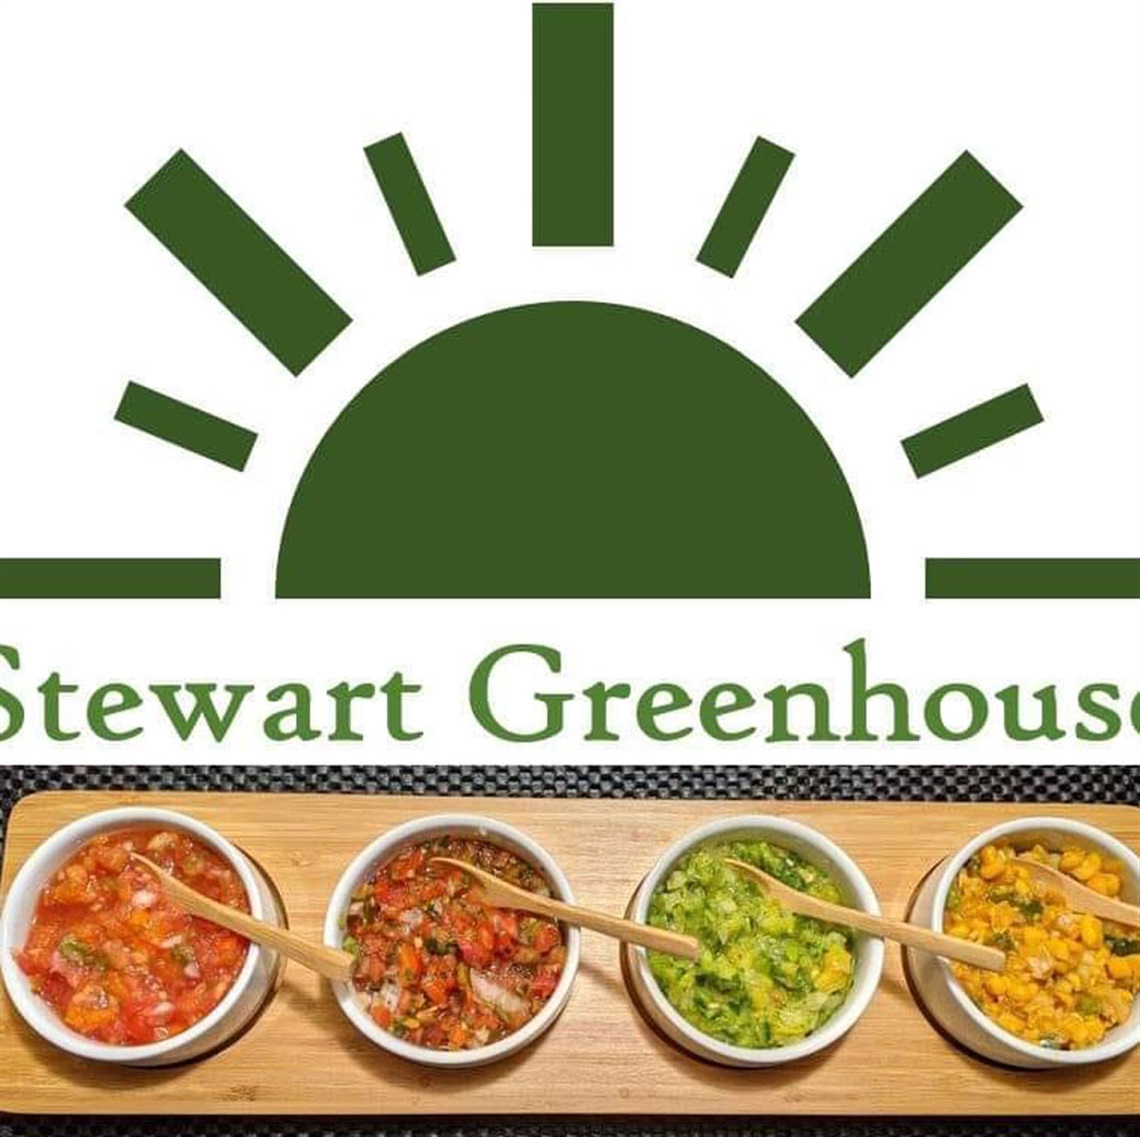 Stewart Greenhouse logo